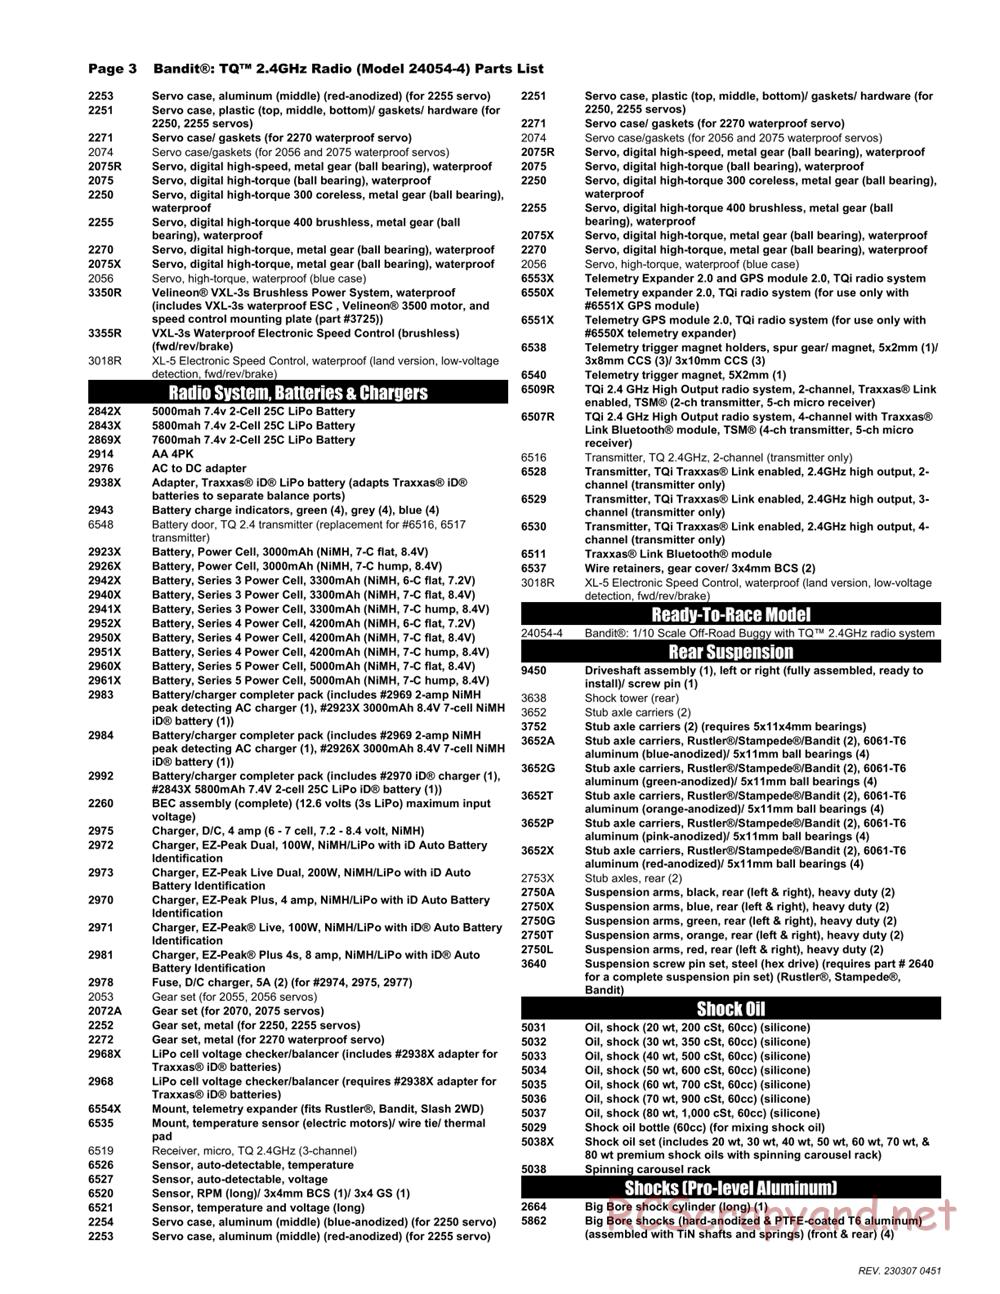 Traxxas - Bandit XL-5 (2018) - Parts List - Page 3